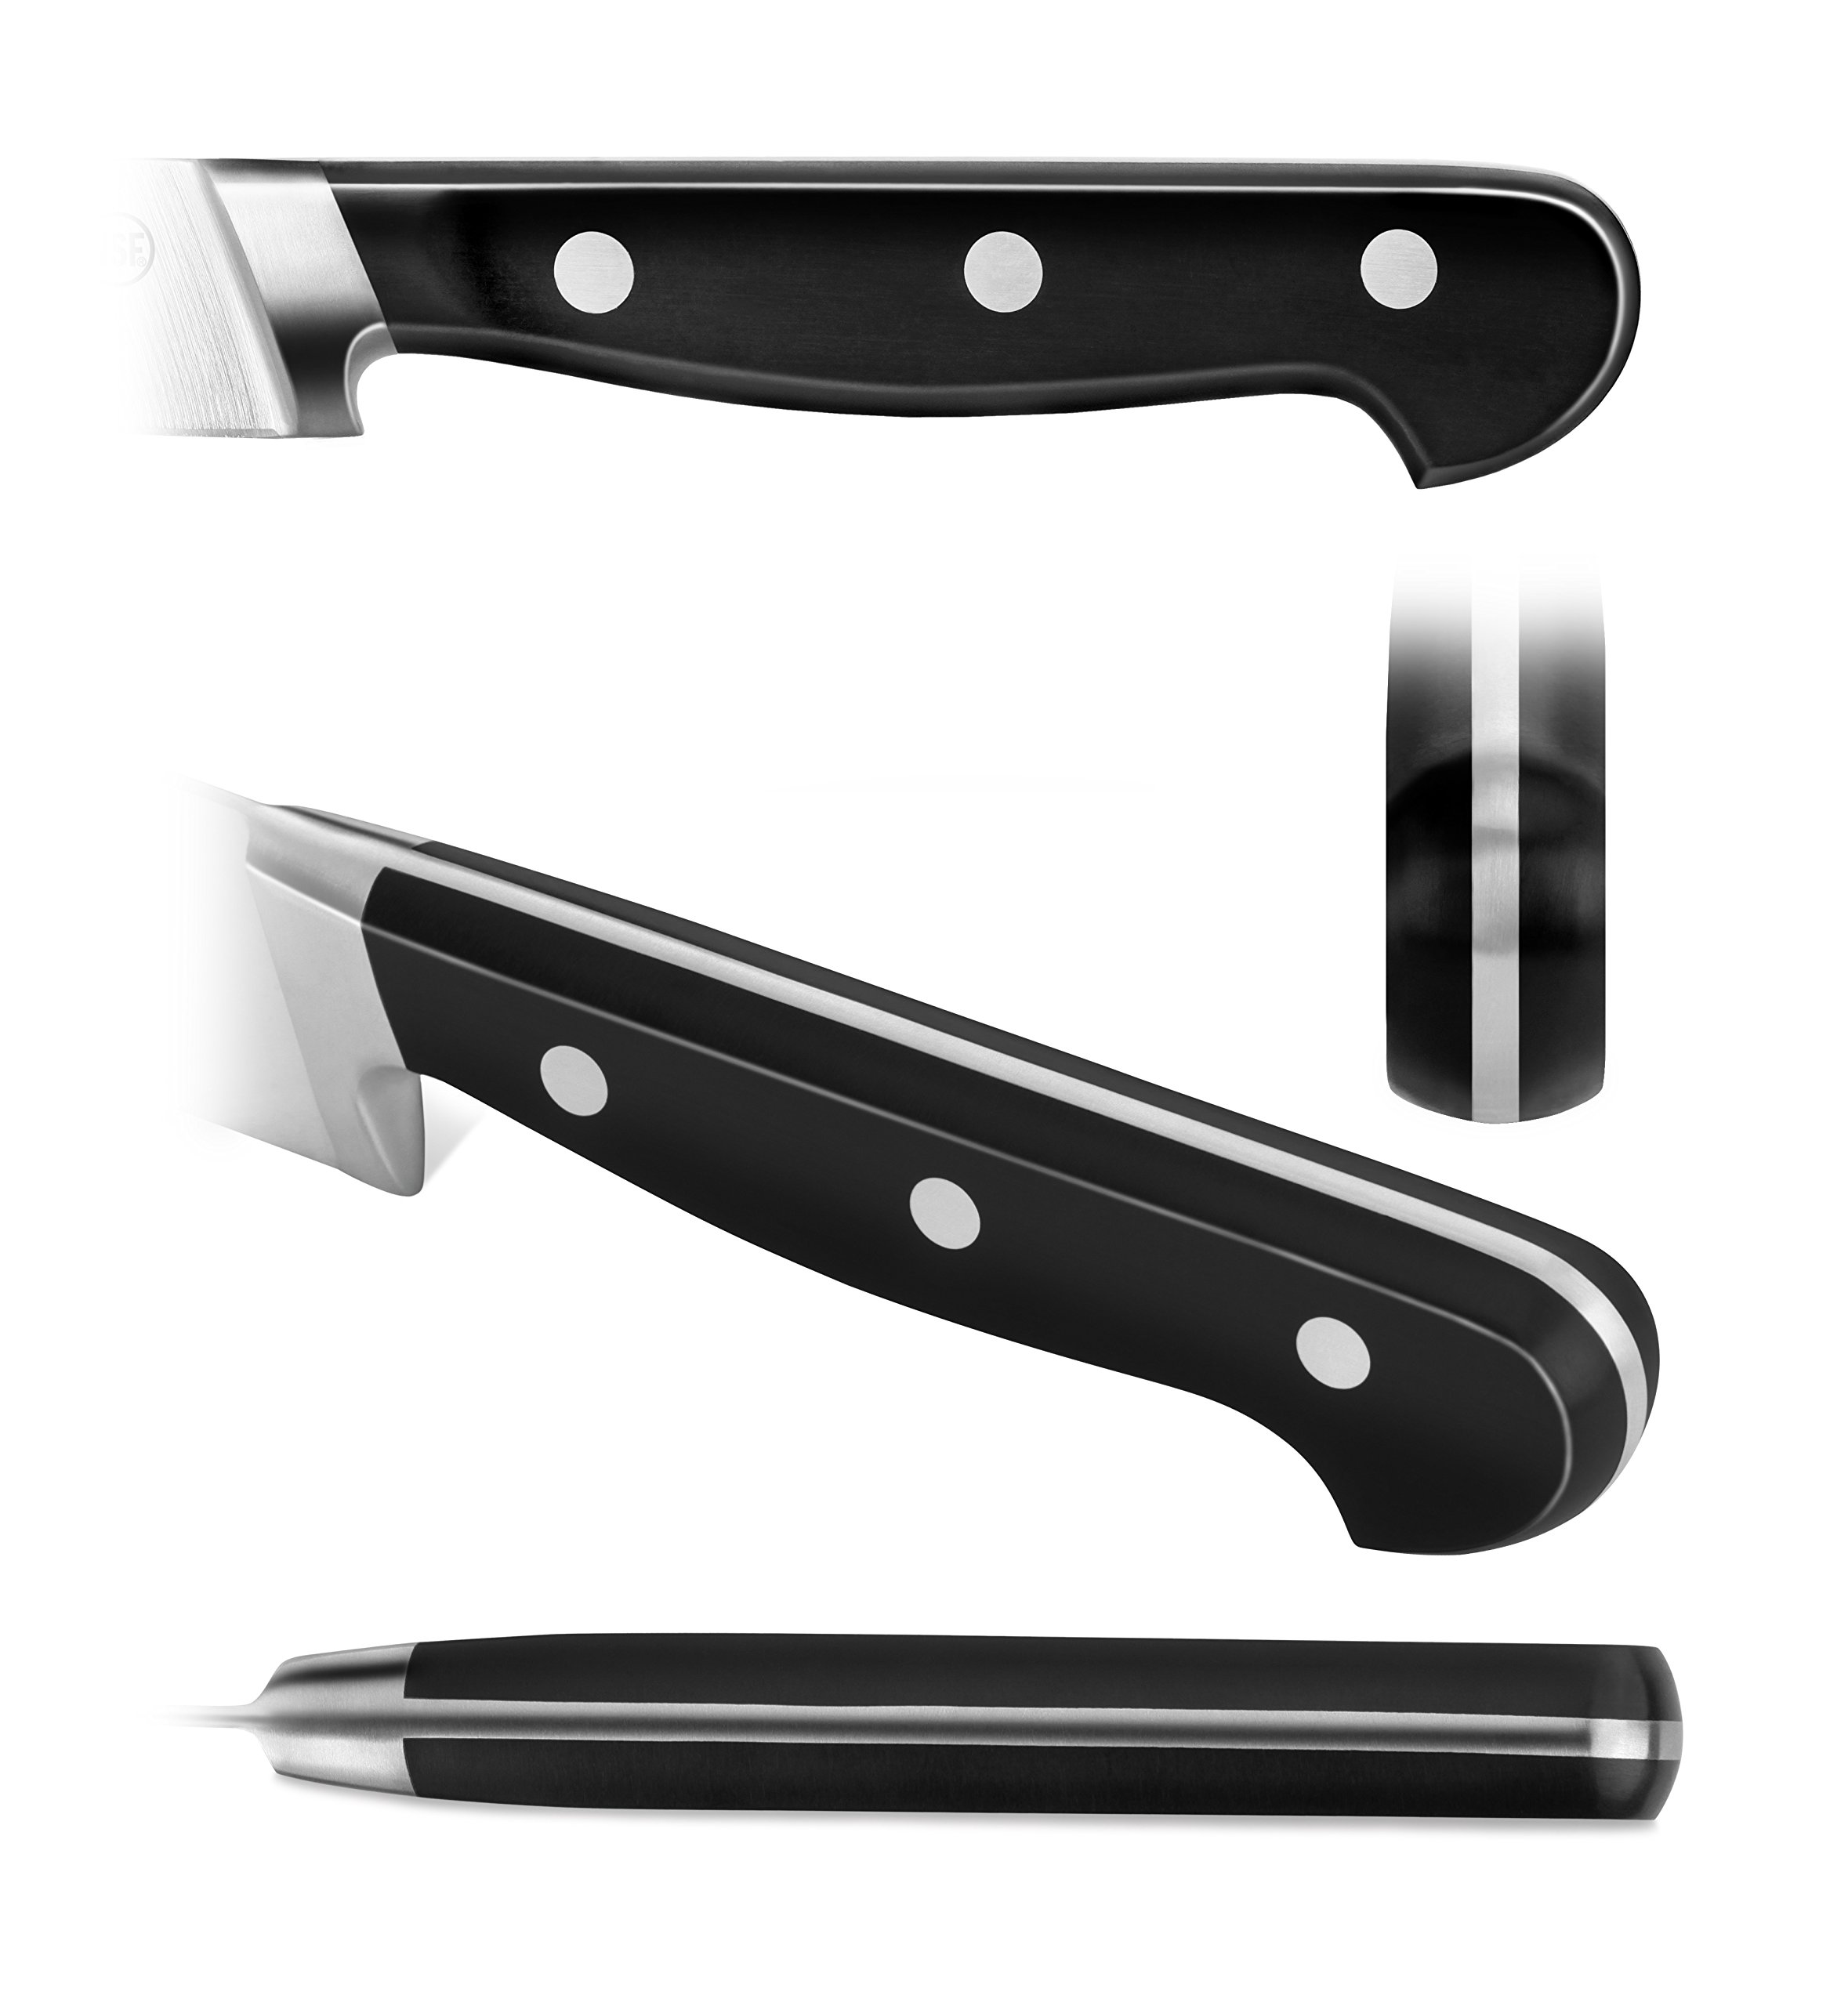 Cangshan V2 Series 1020434 German Steel Forged Peeling/Tourne Knife, 2.75-Inch Blade